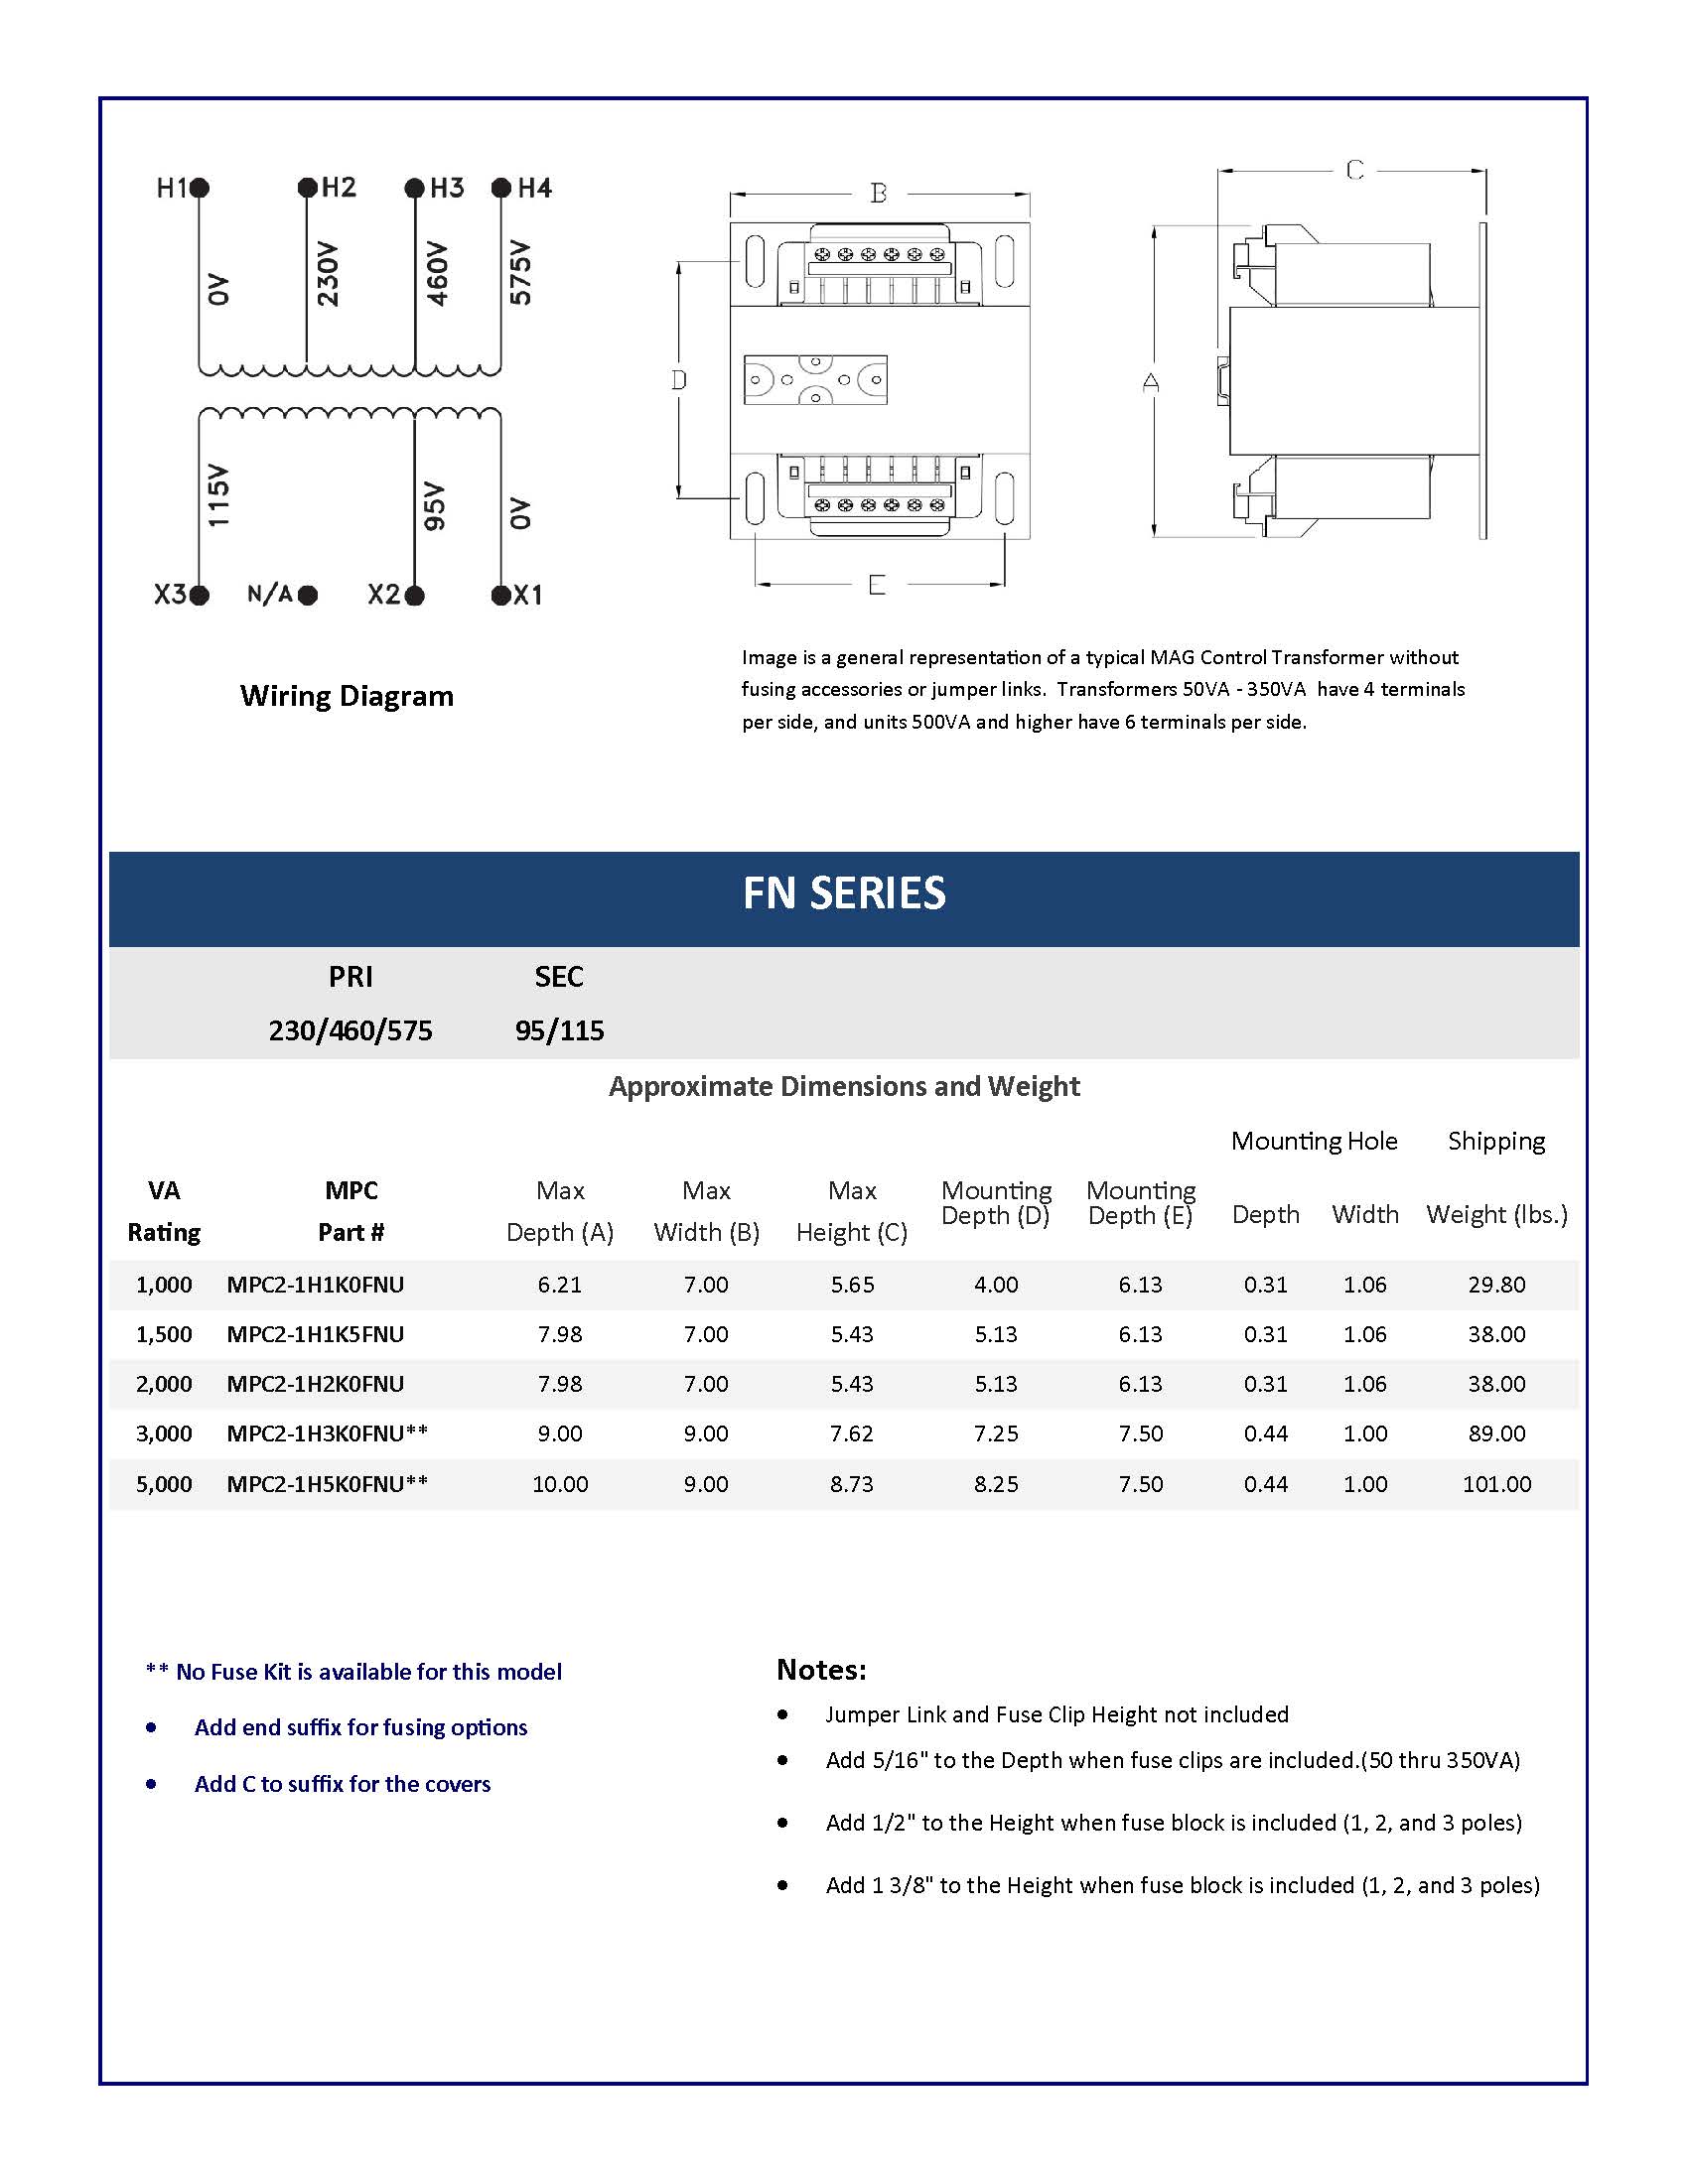 FN Series Data Sheet